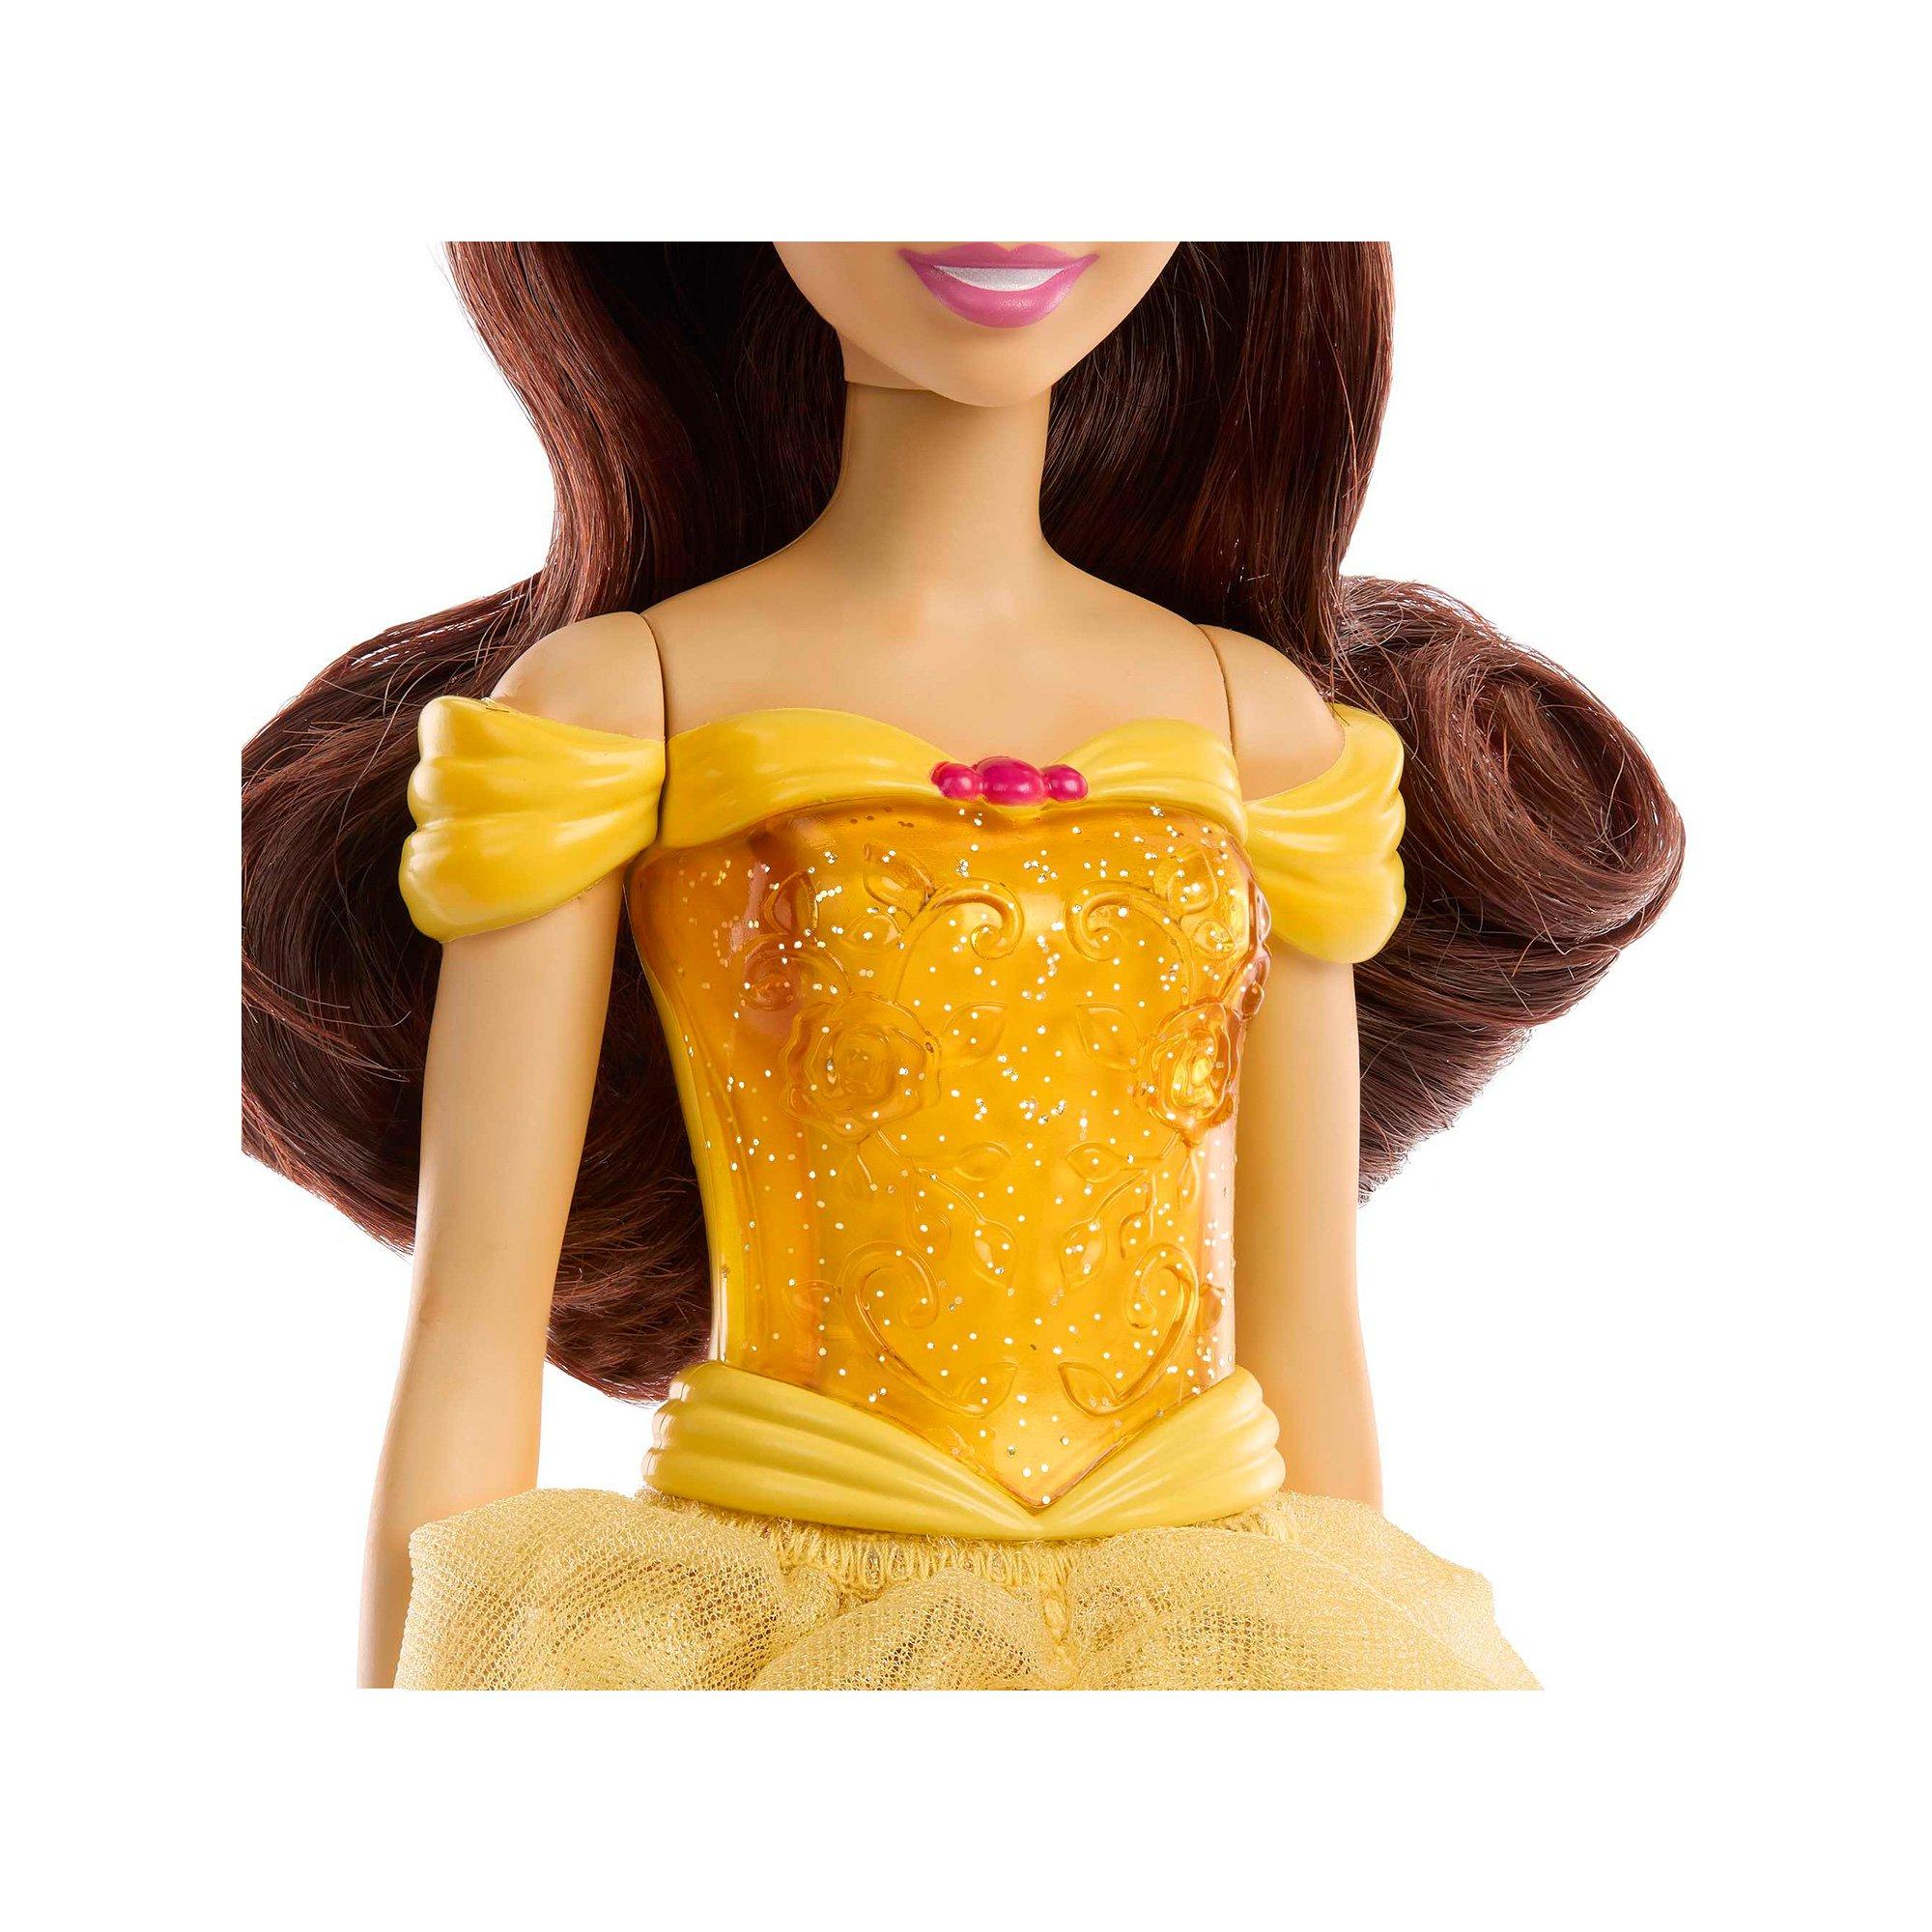 Mattel  Bambola Disney Princess Belle 